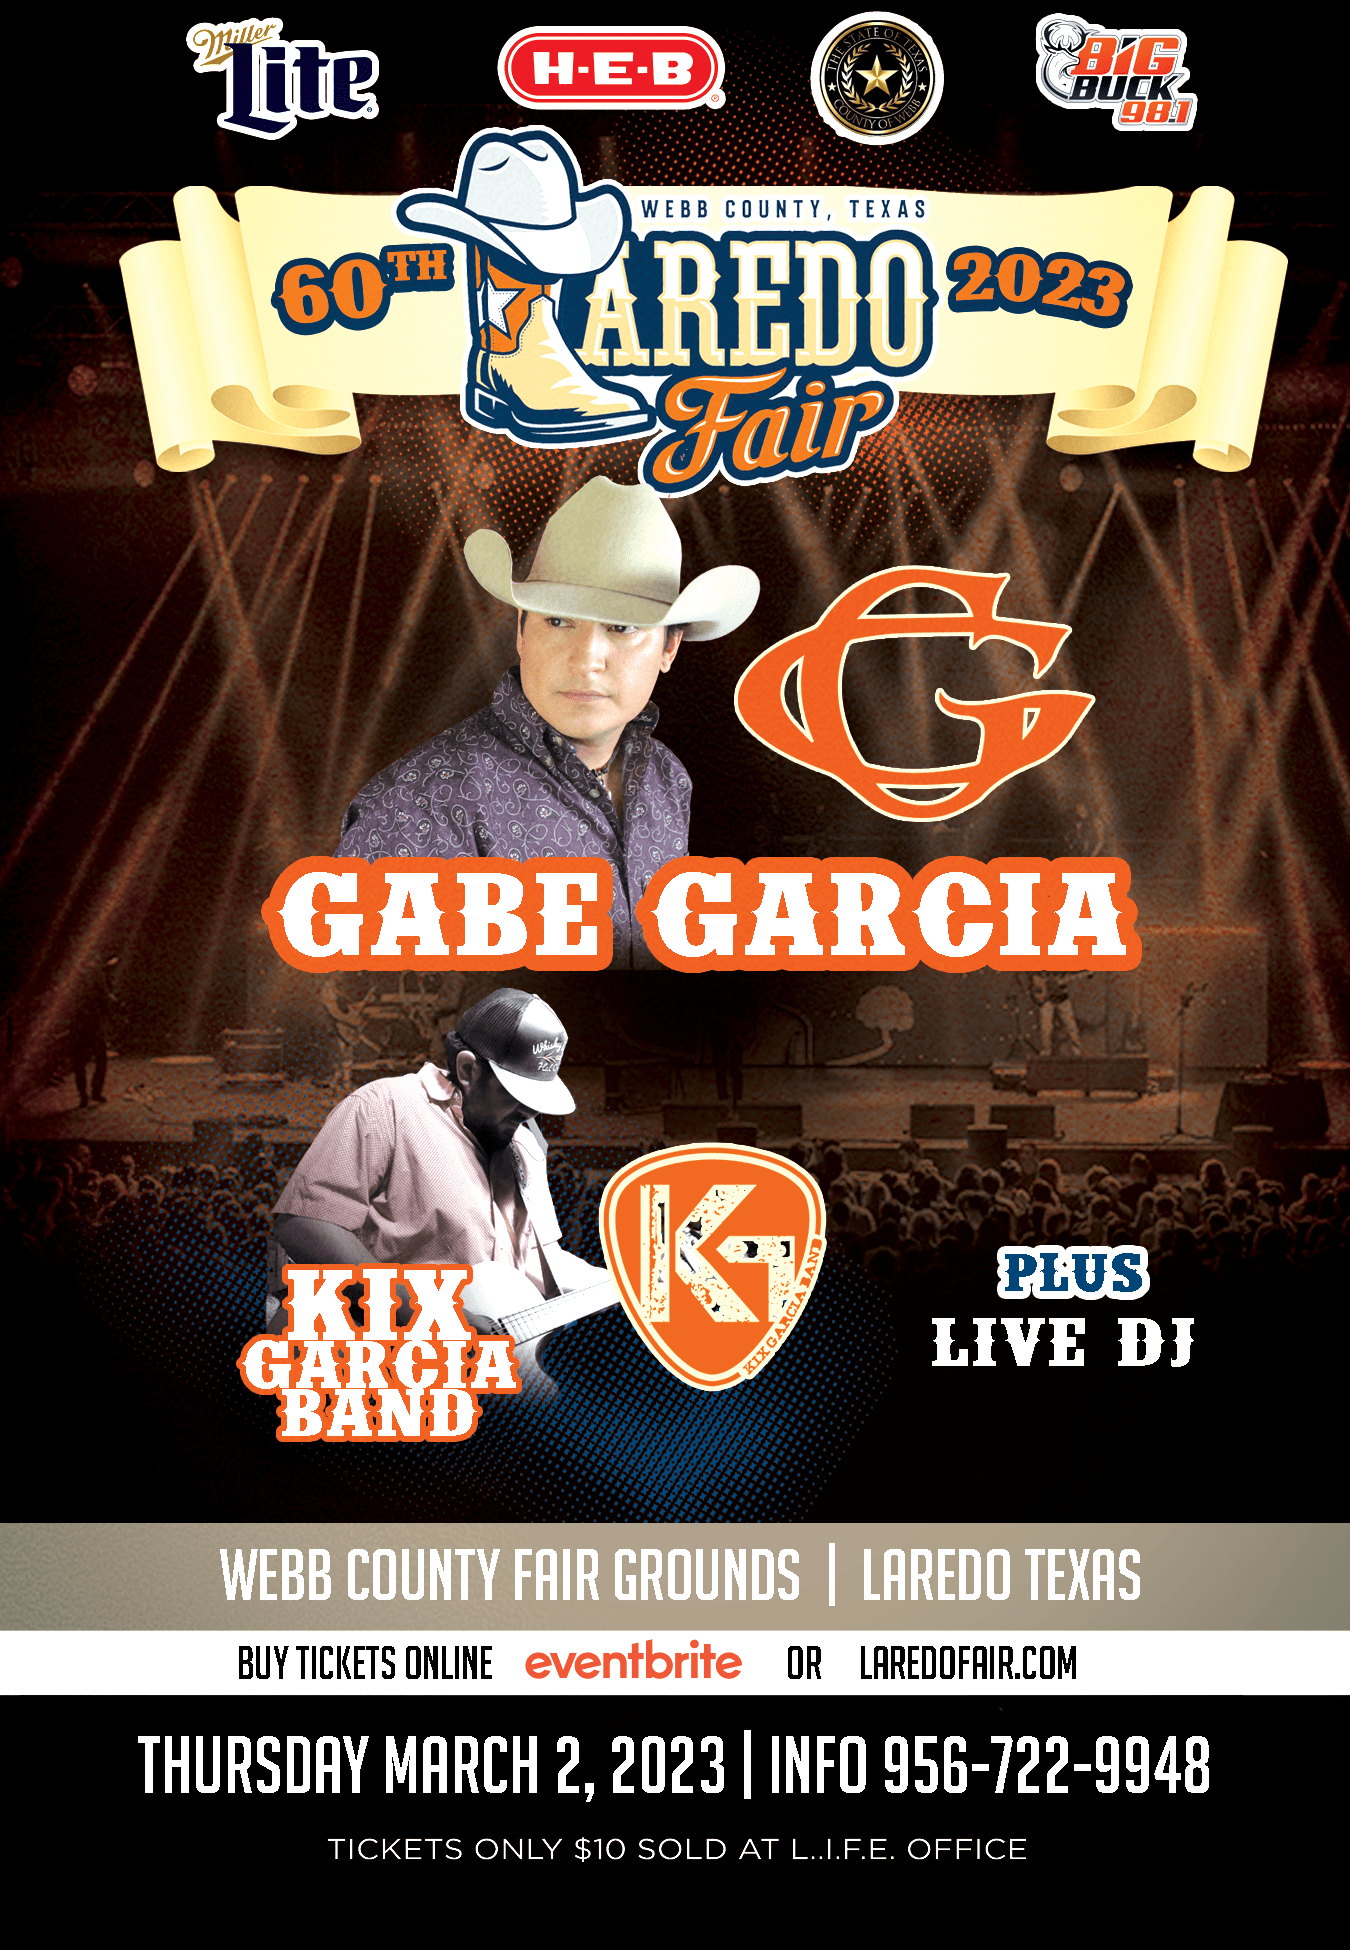 In Concert - Gabe Garcia, Kix Garcia Band, Plus Live DJ @ Webb County Fair Grounds